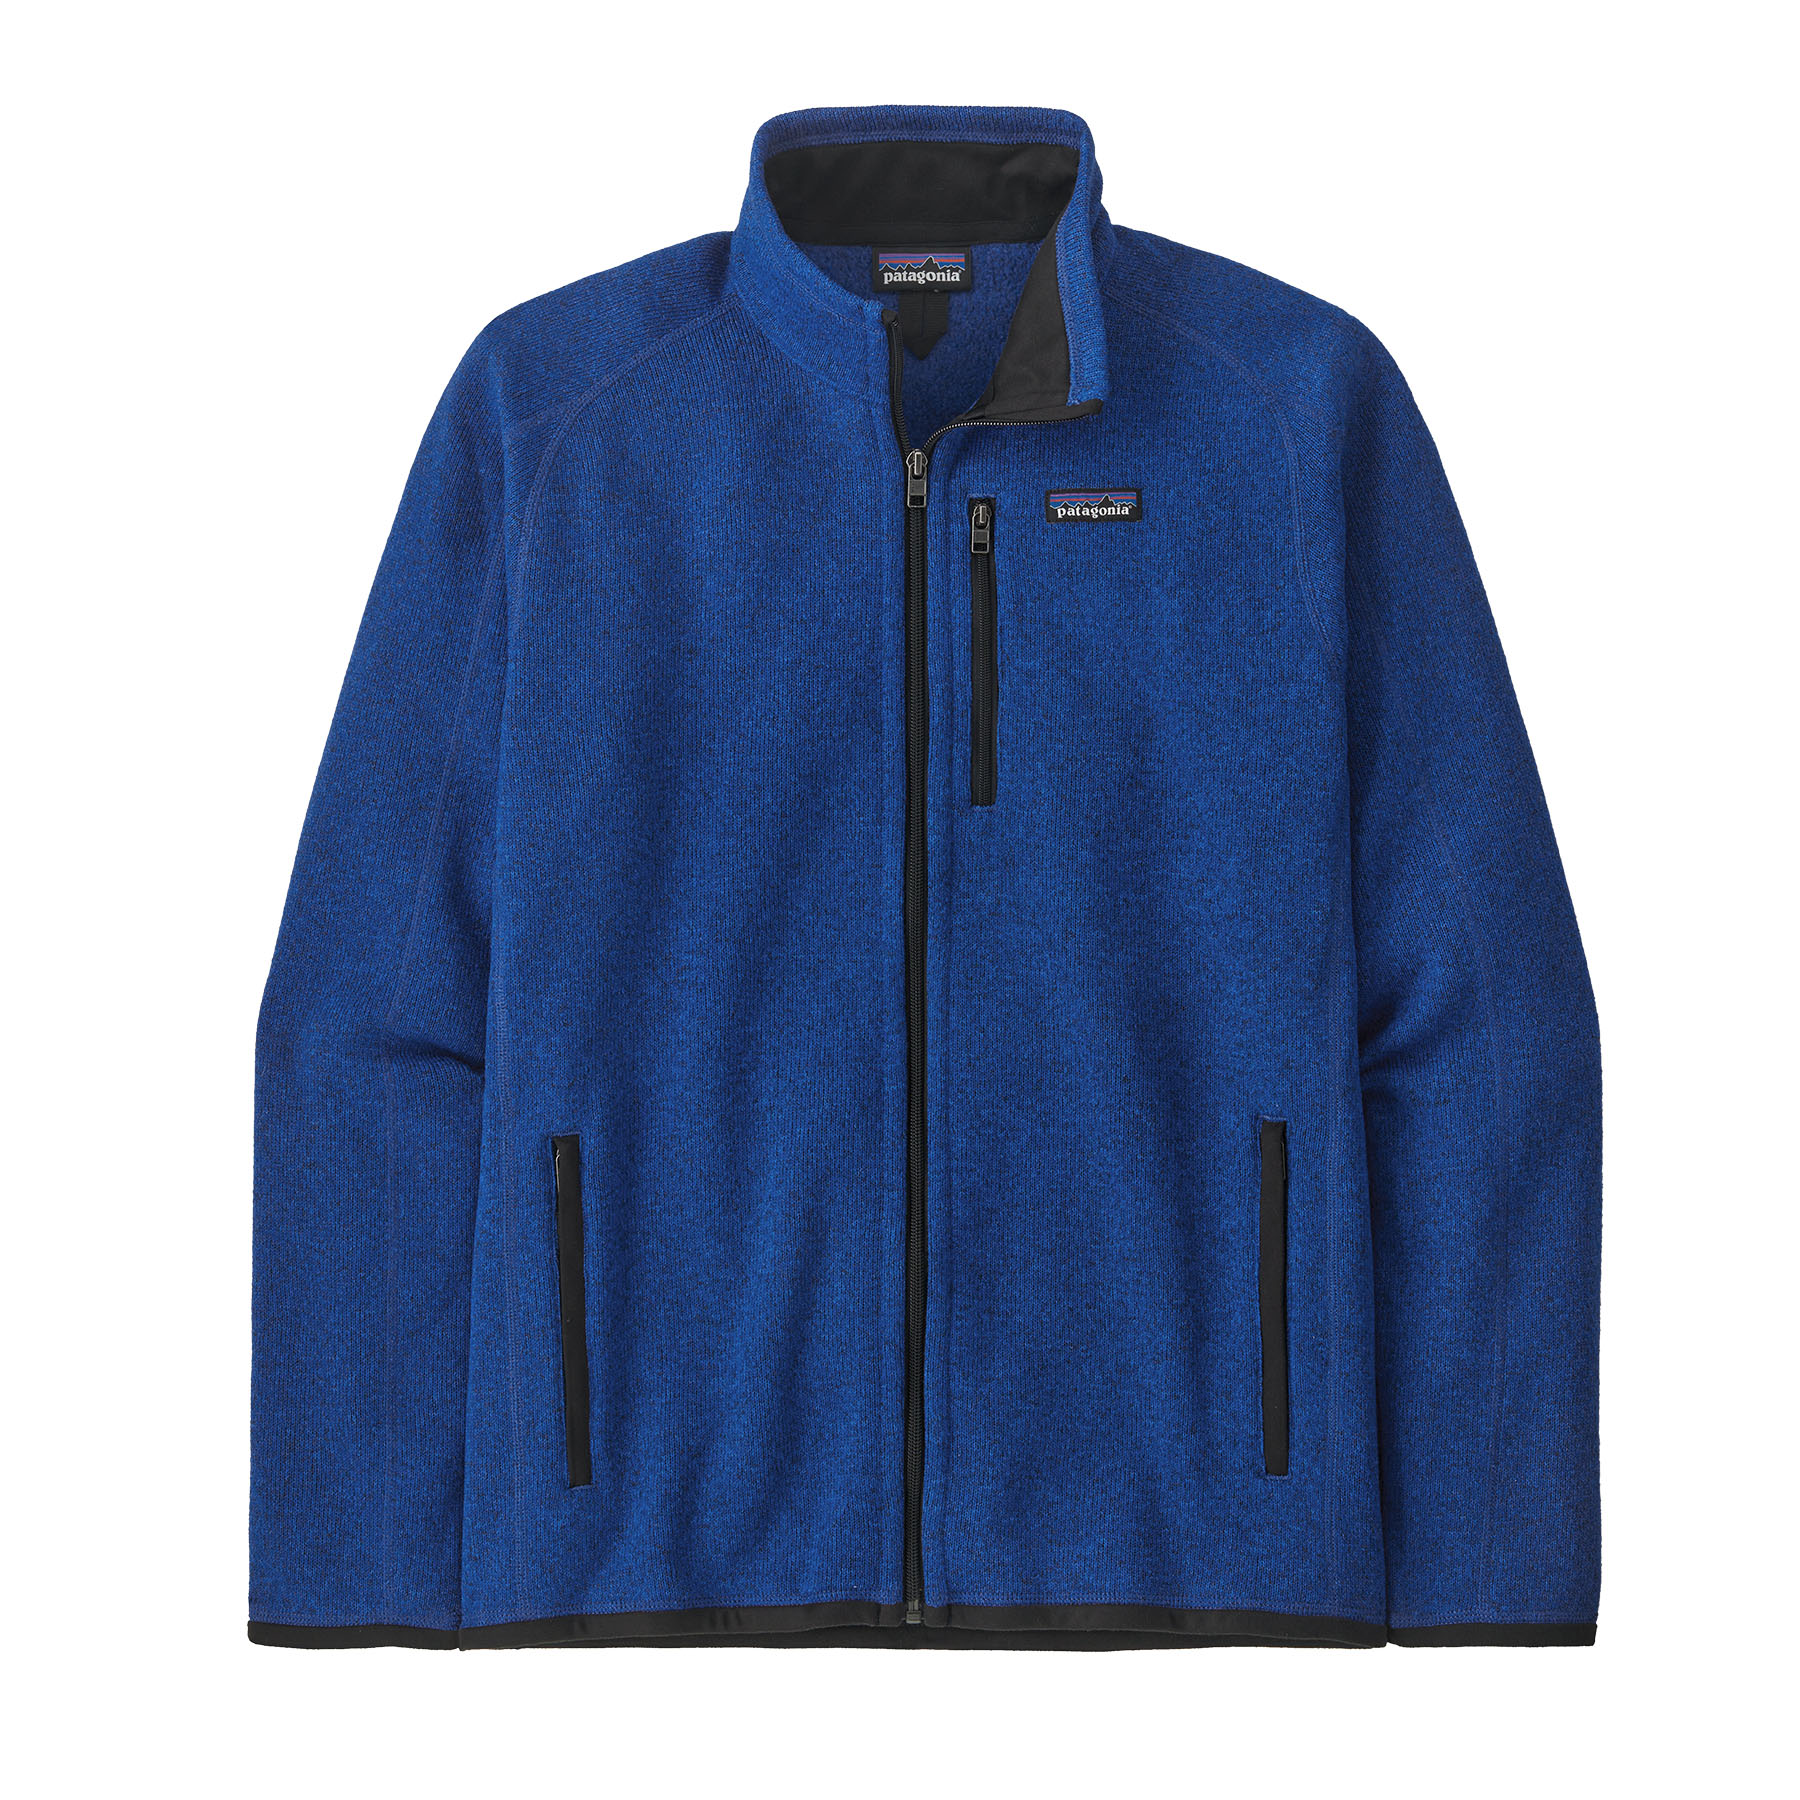 Better Sweater Jacket (passage blue)